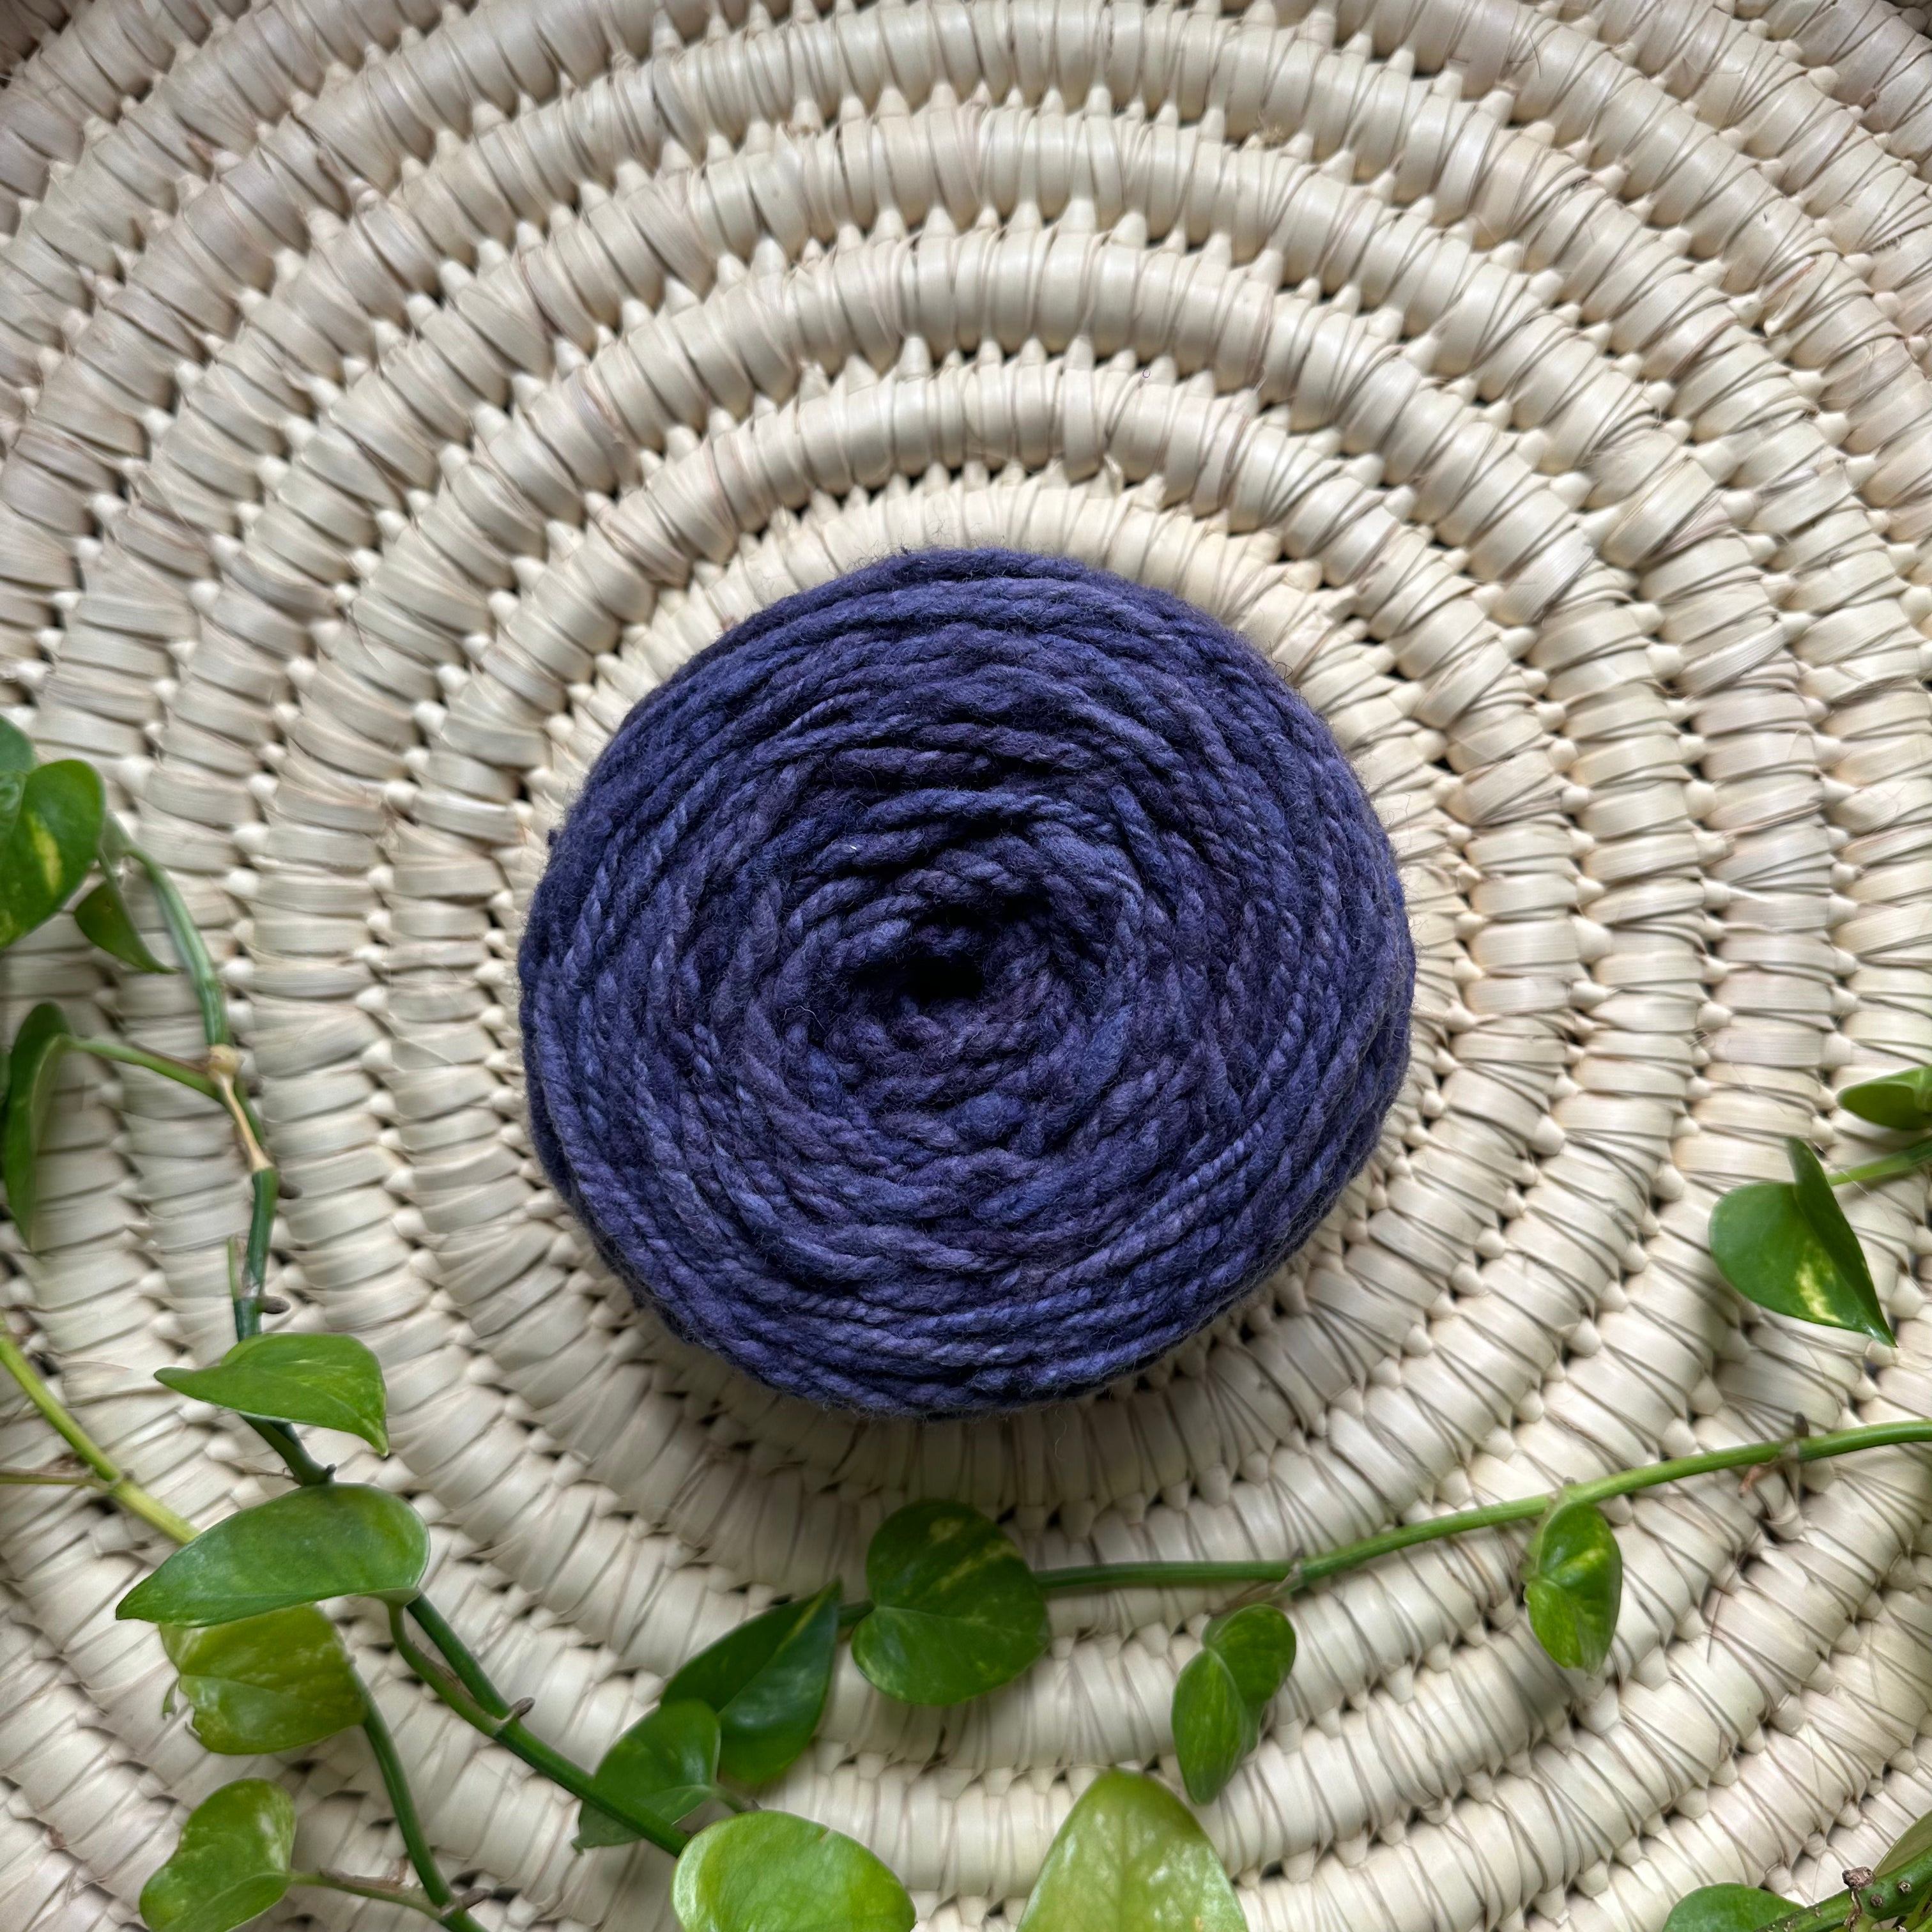 display of lavender colored yarn